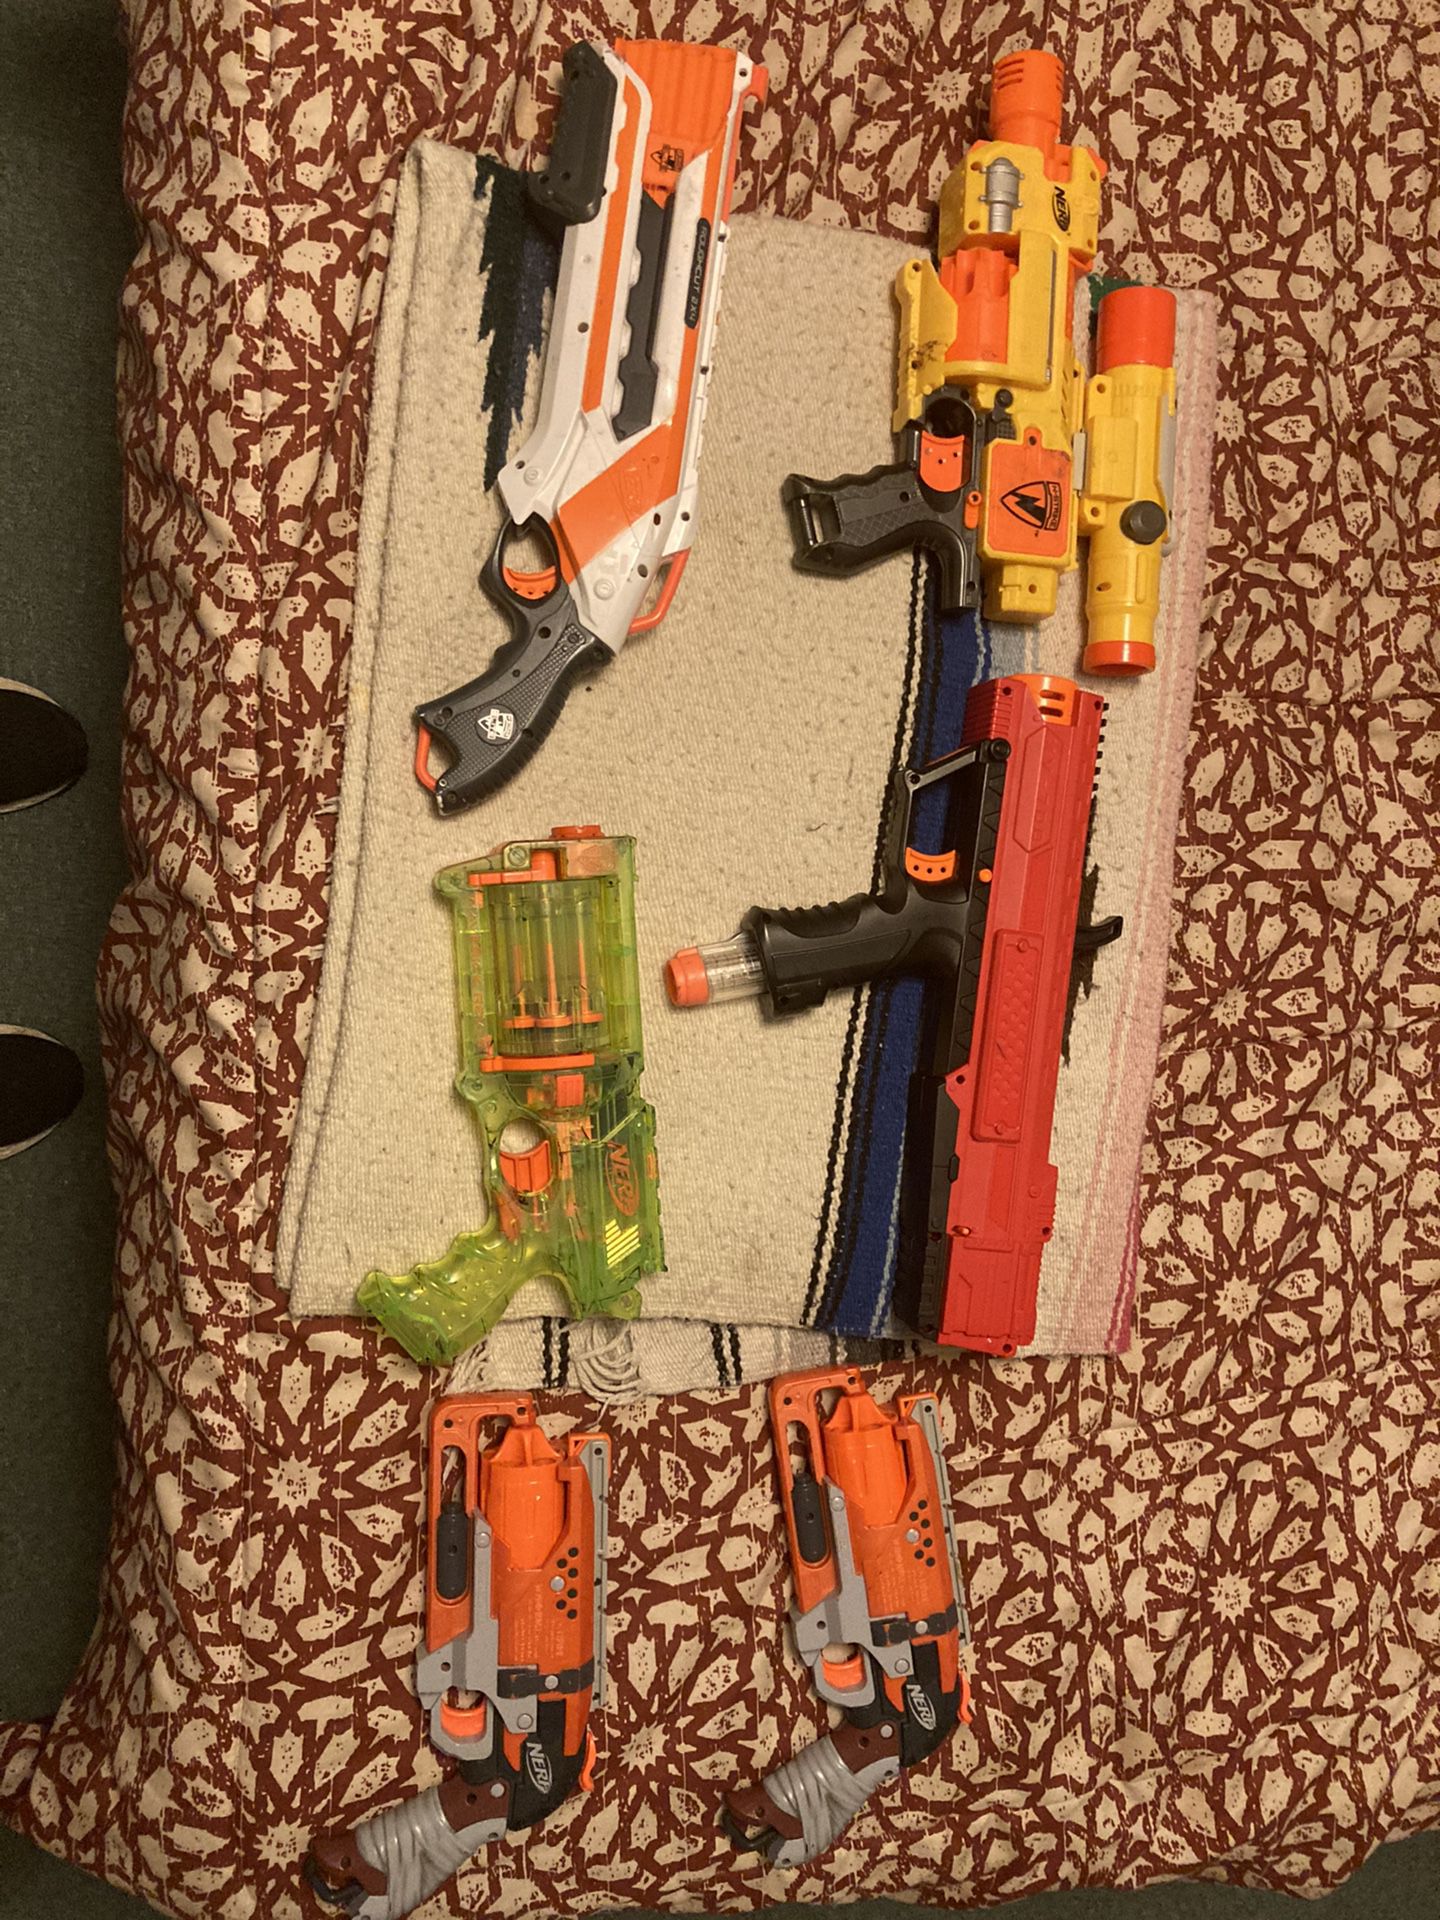 6 Nerf Guns